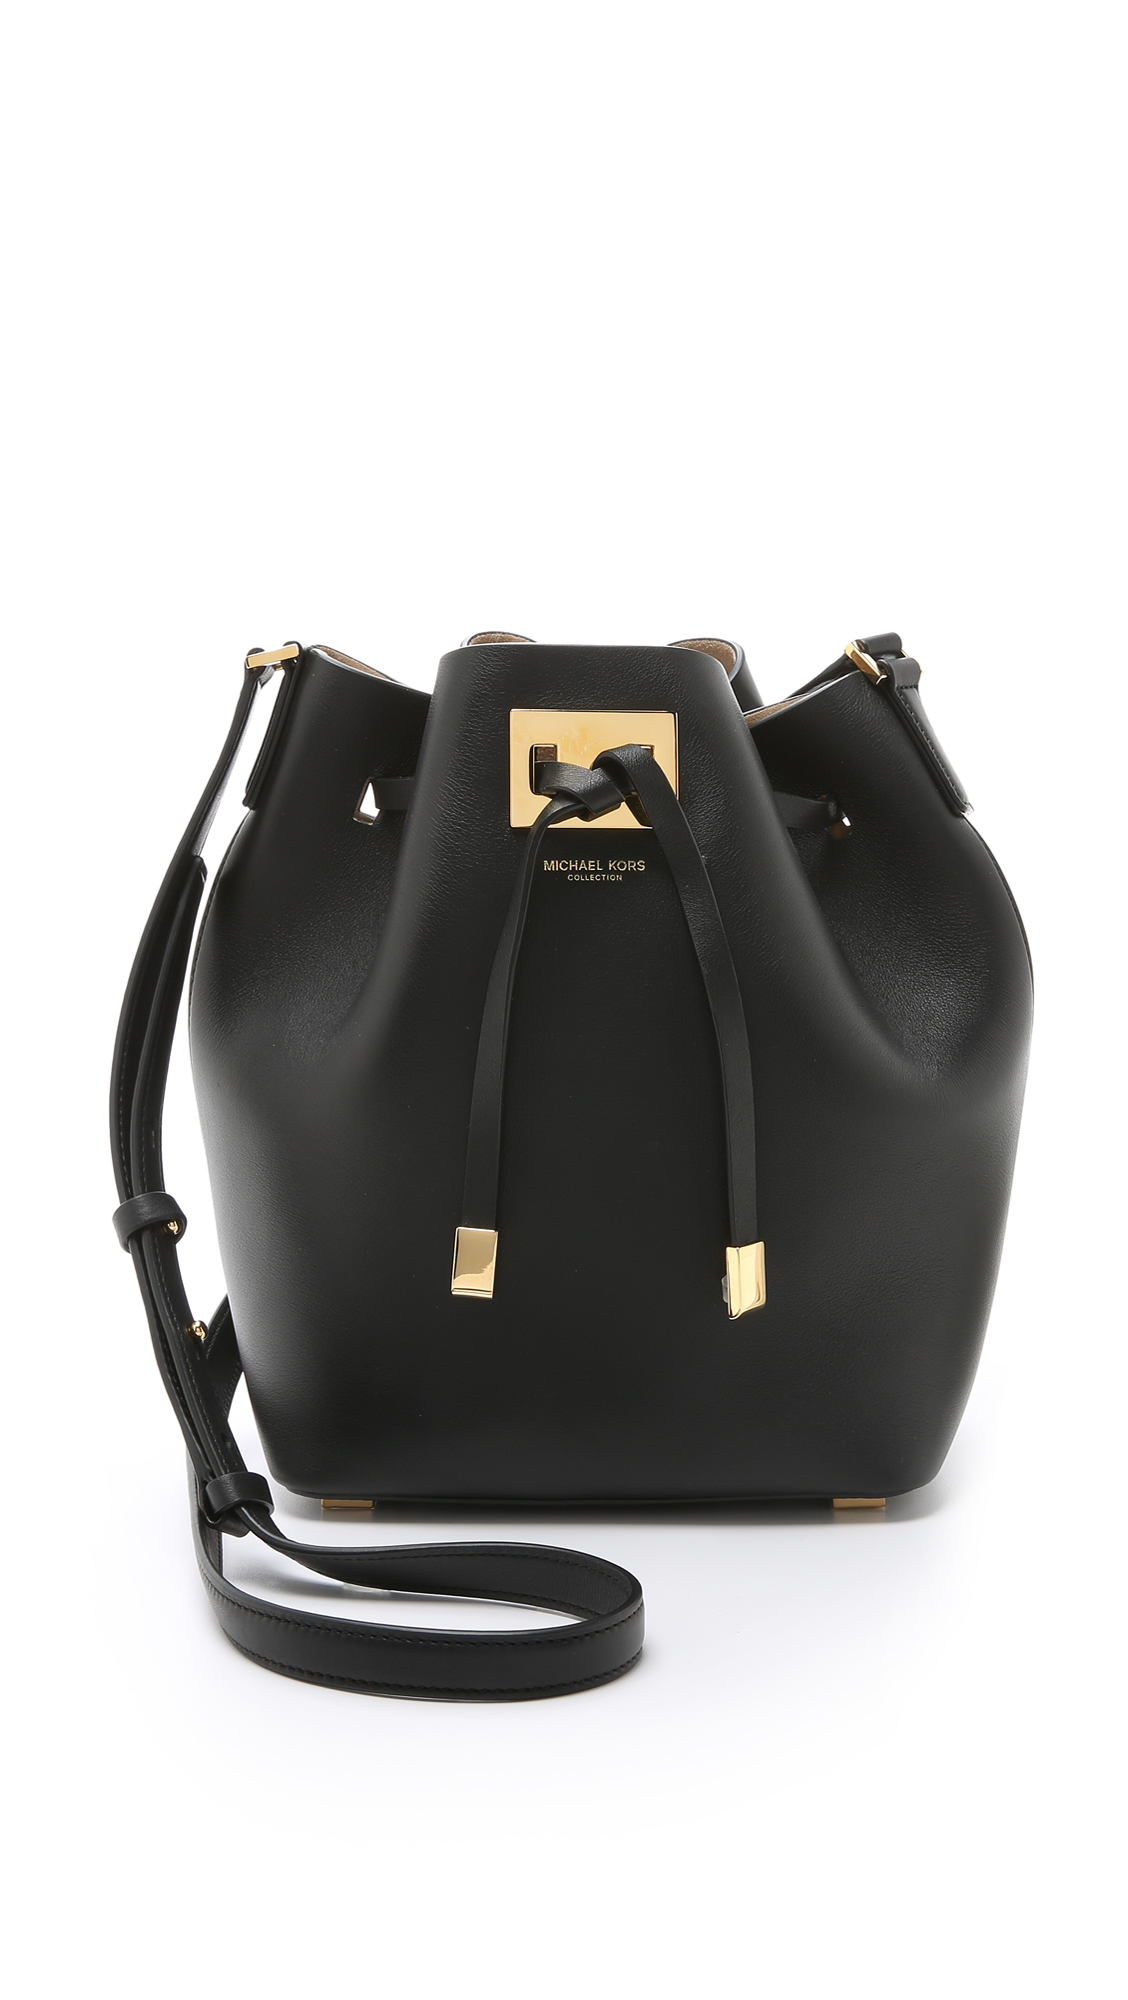 Michael Kors Leather Miranda Medium Bucket Bag in Black - Lyst